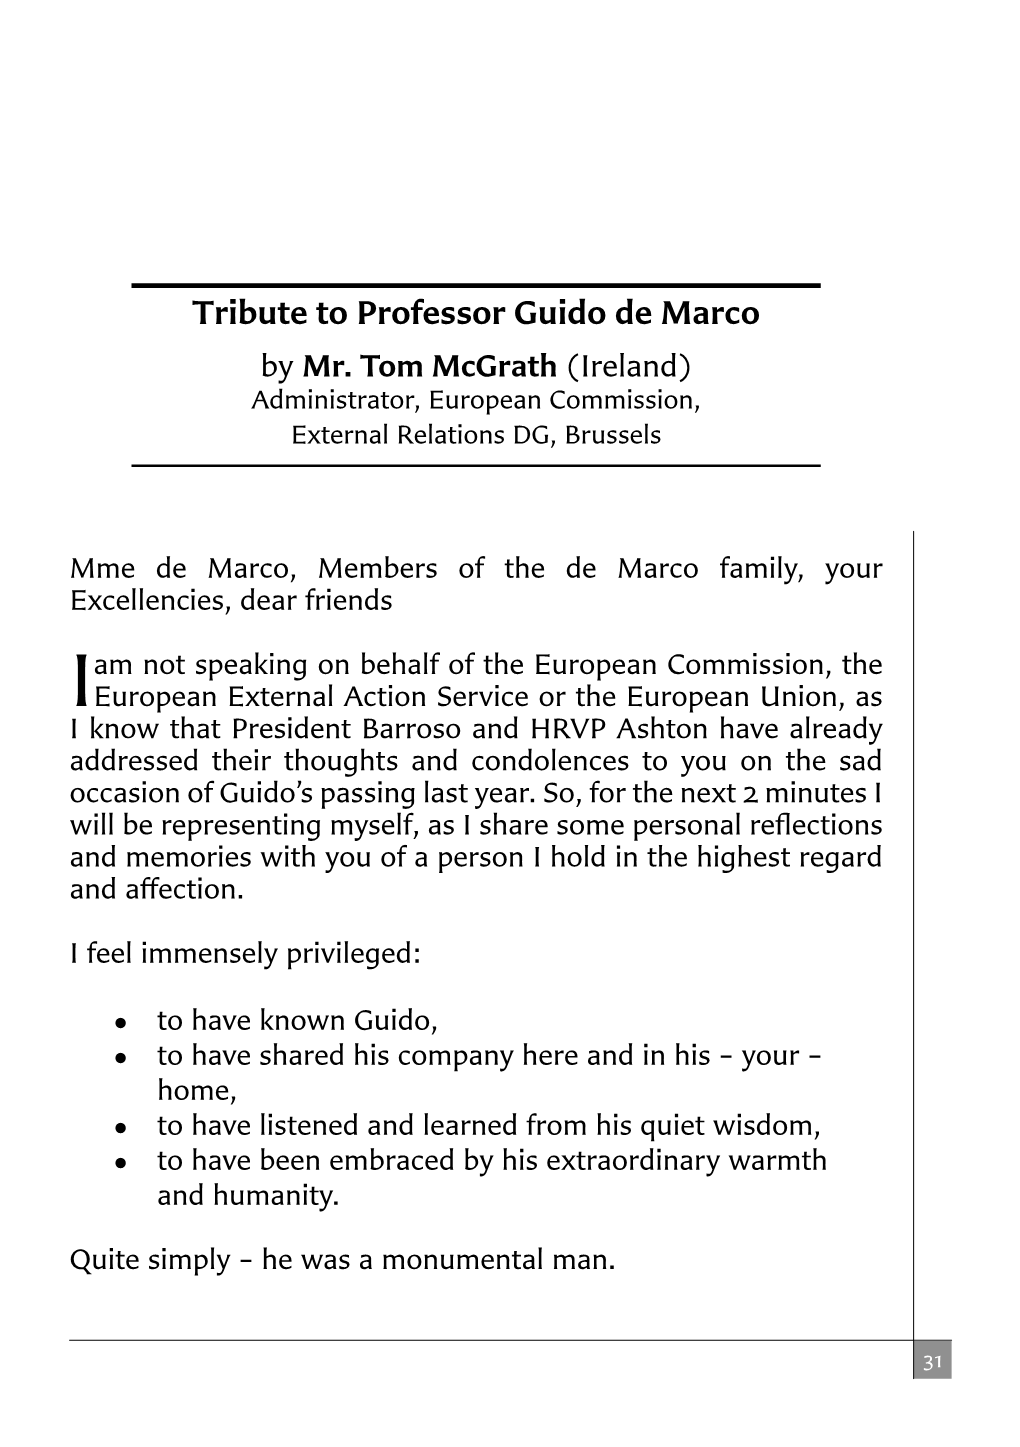 Tribute to Professor Guido De Marco by Mr